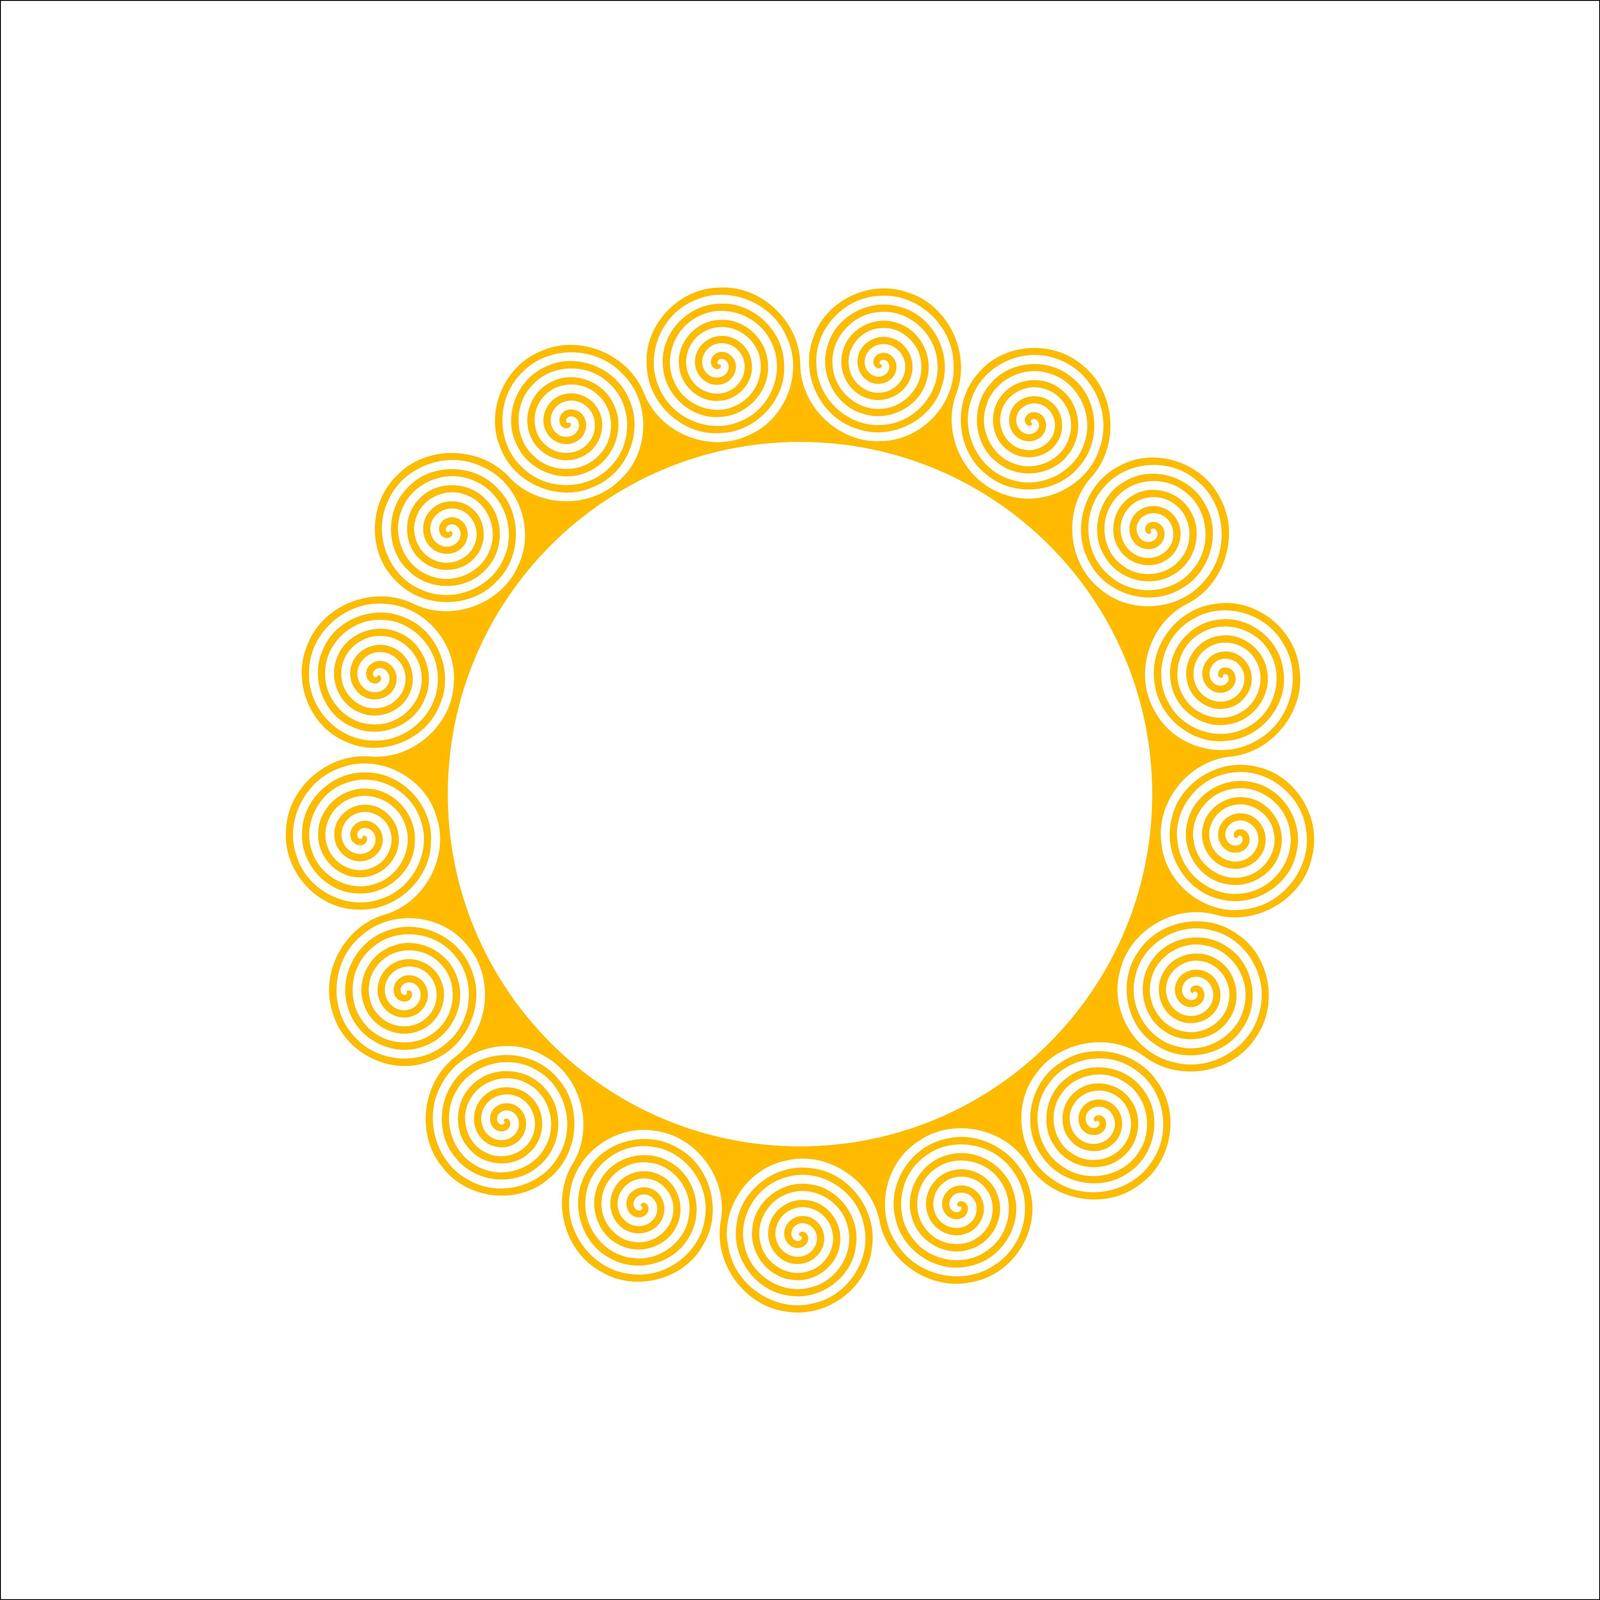 Sun tribal spiral rays logo. sunshine swirl concept. Stock Vector illustration isolated